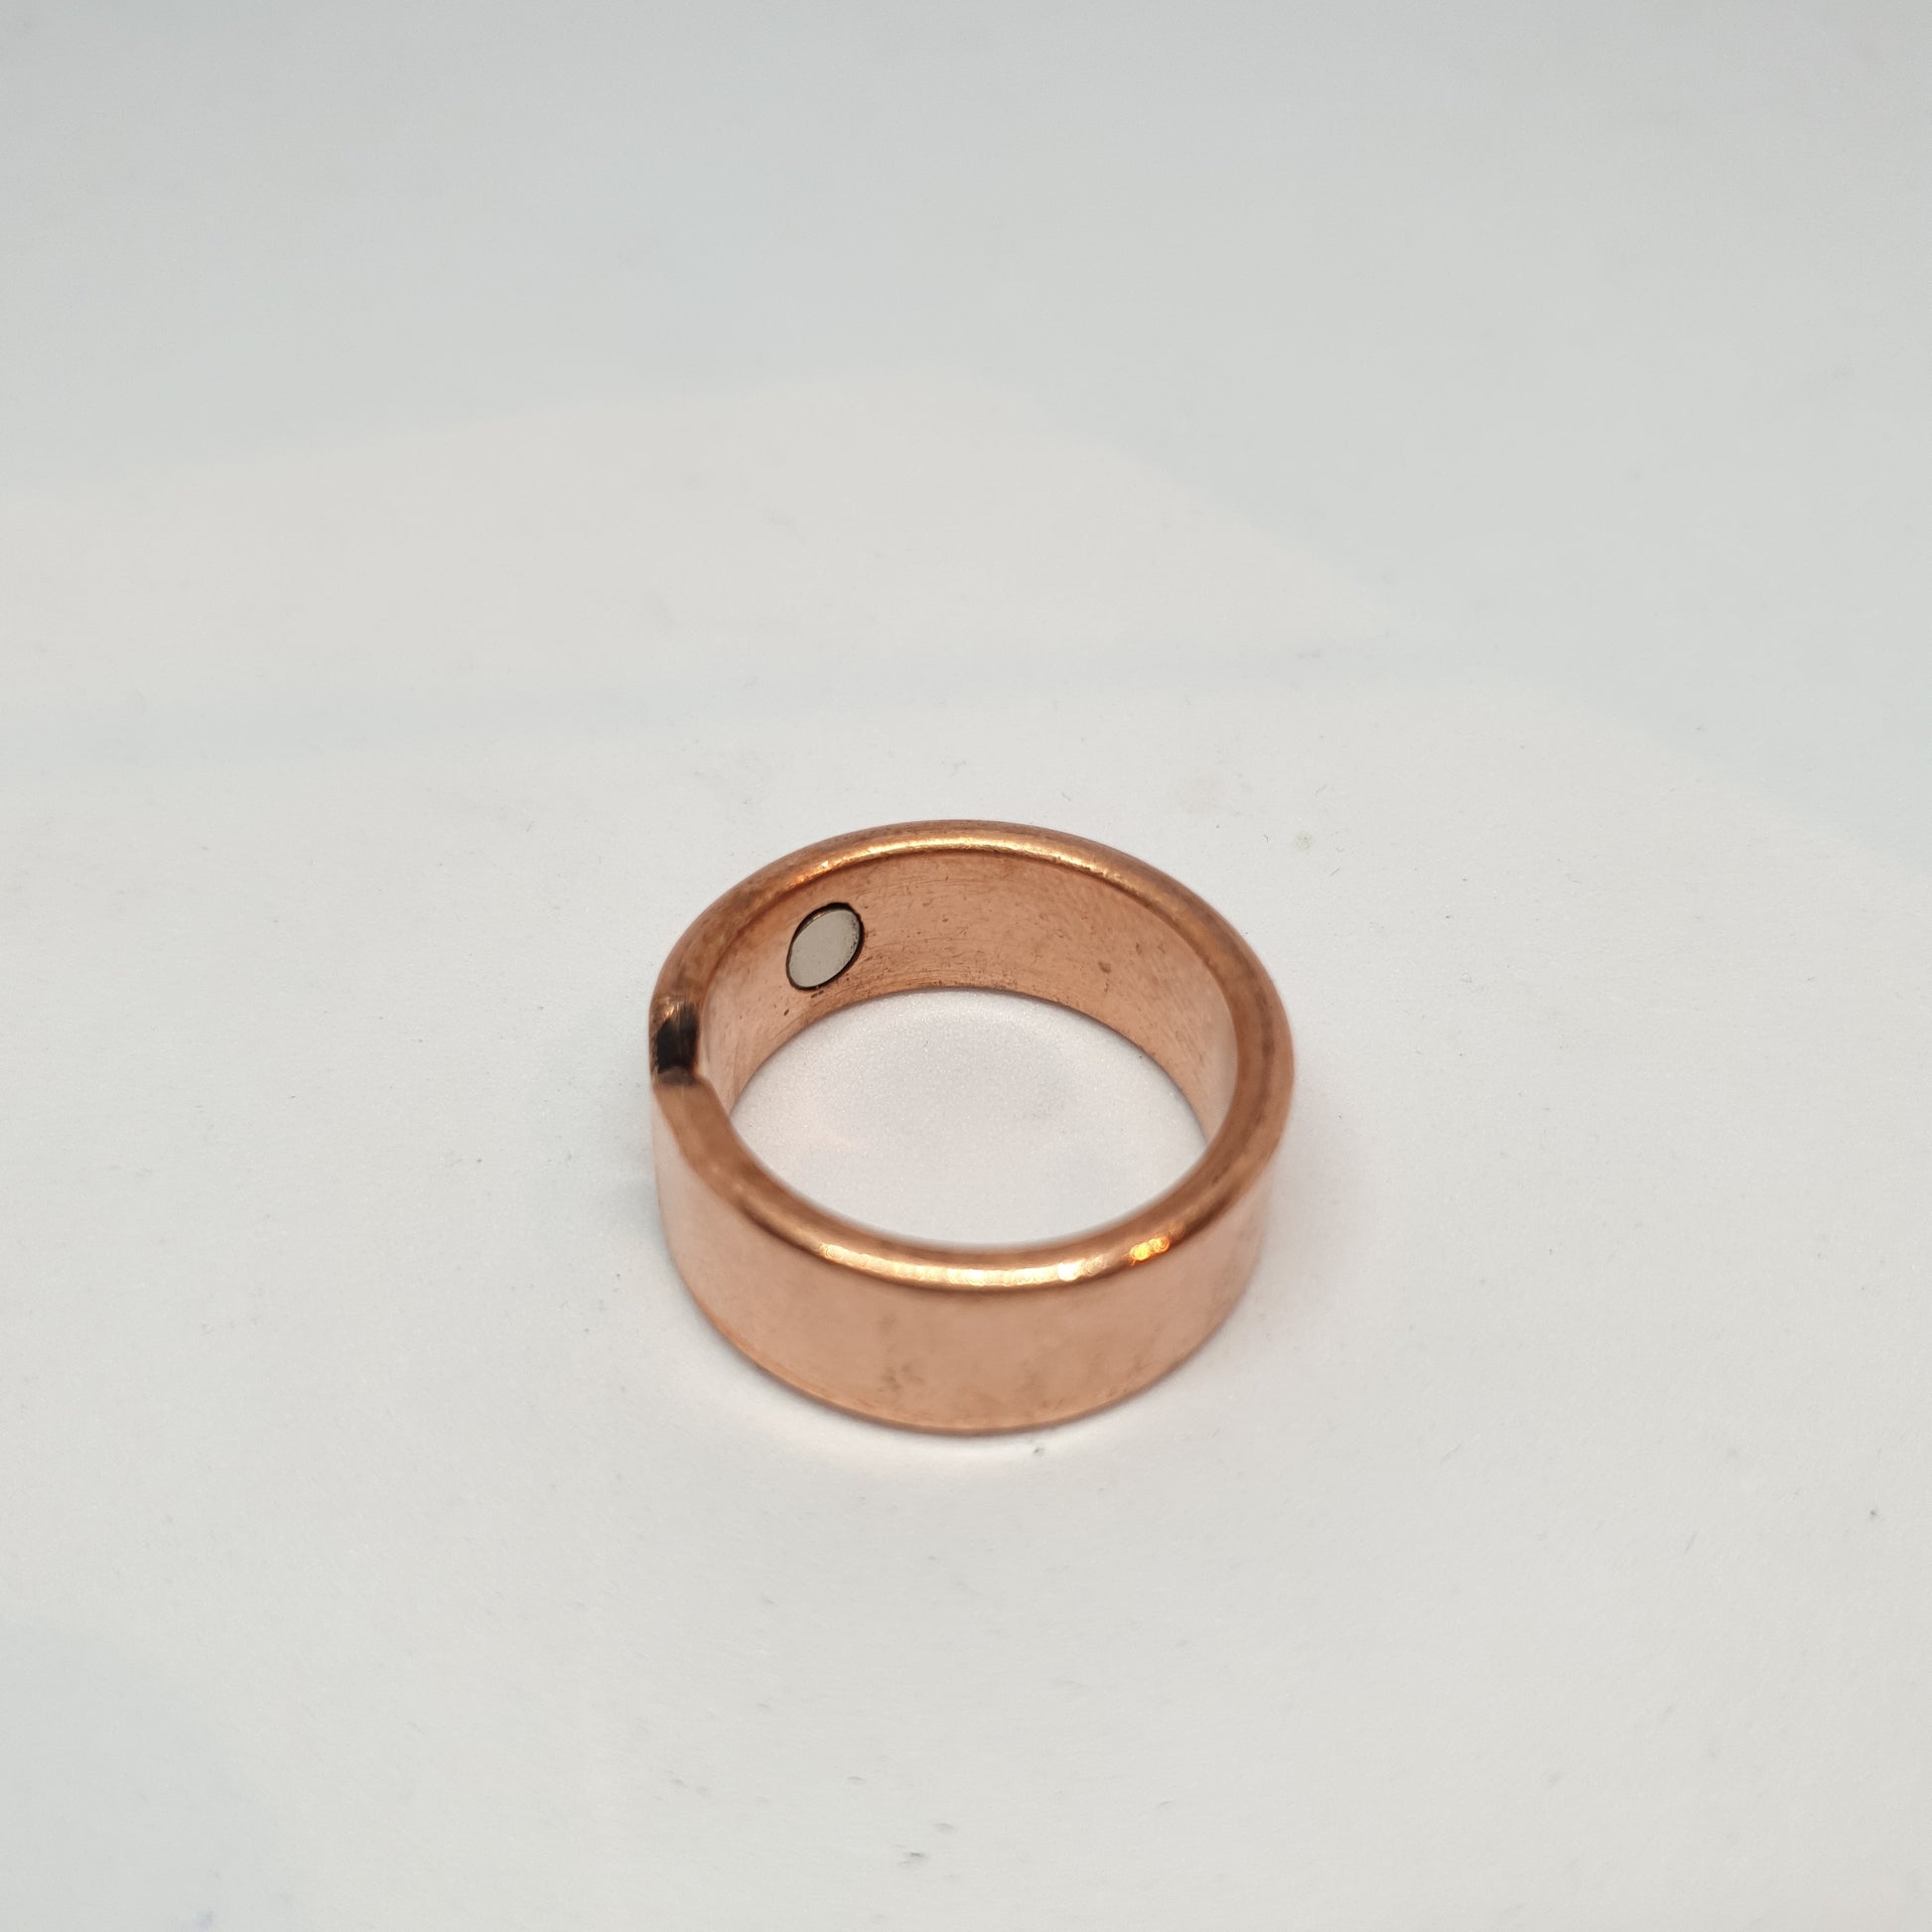 Copper Magnetic plain Ring - Rivendell Shop